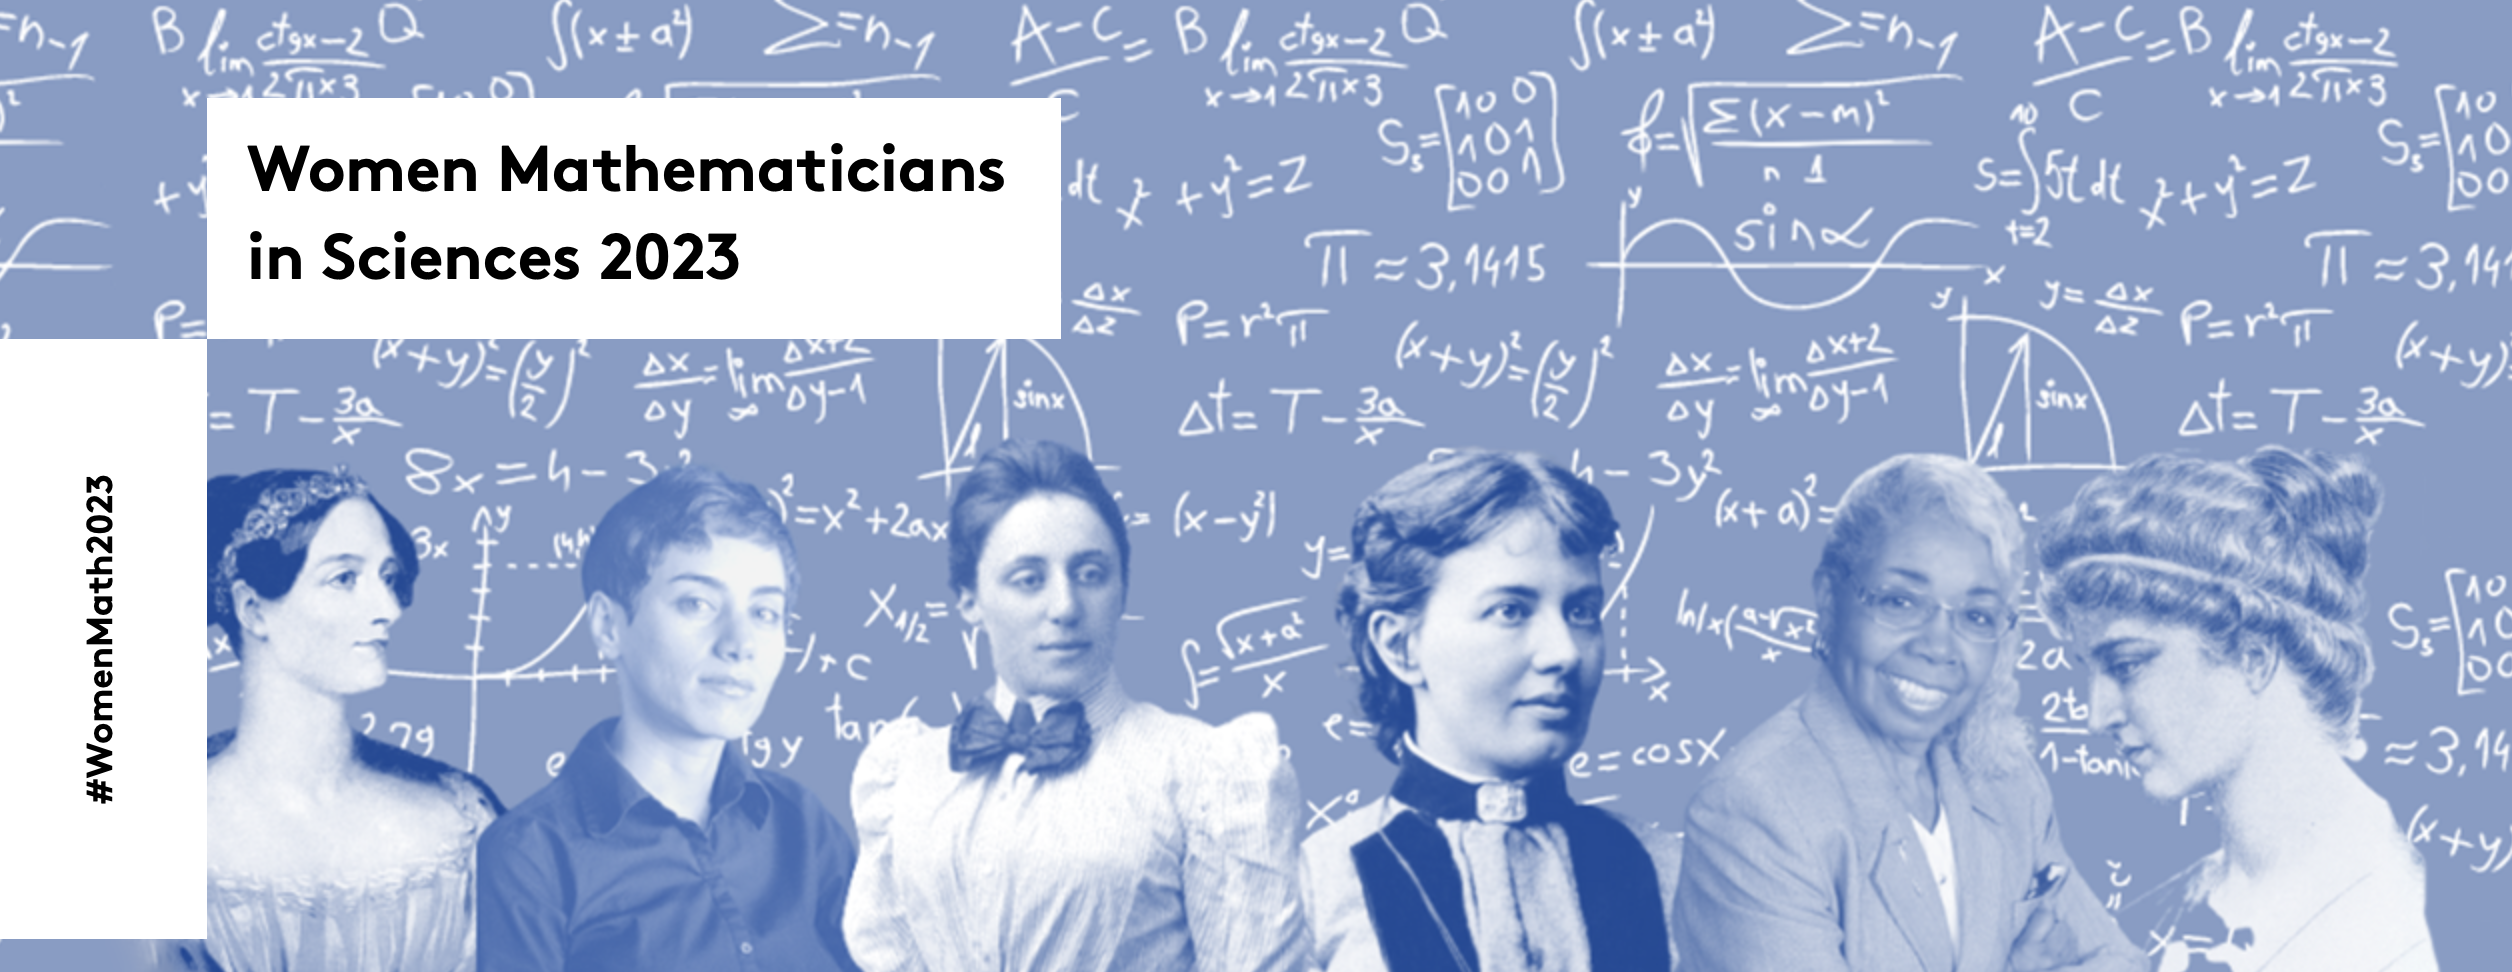 Women Mathematicians in Sciences